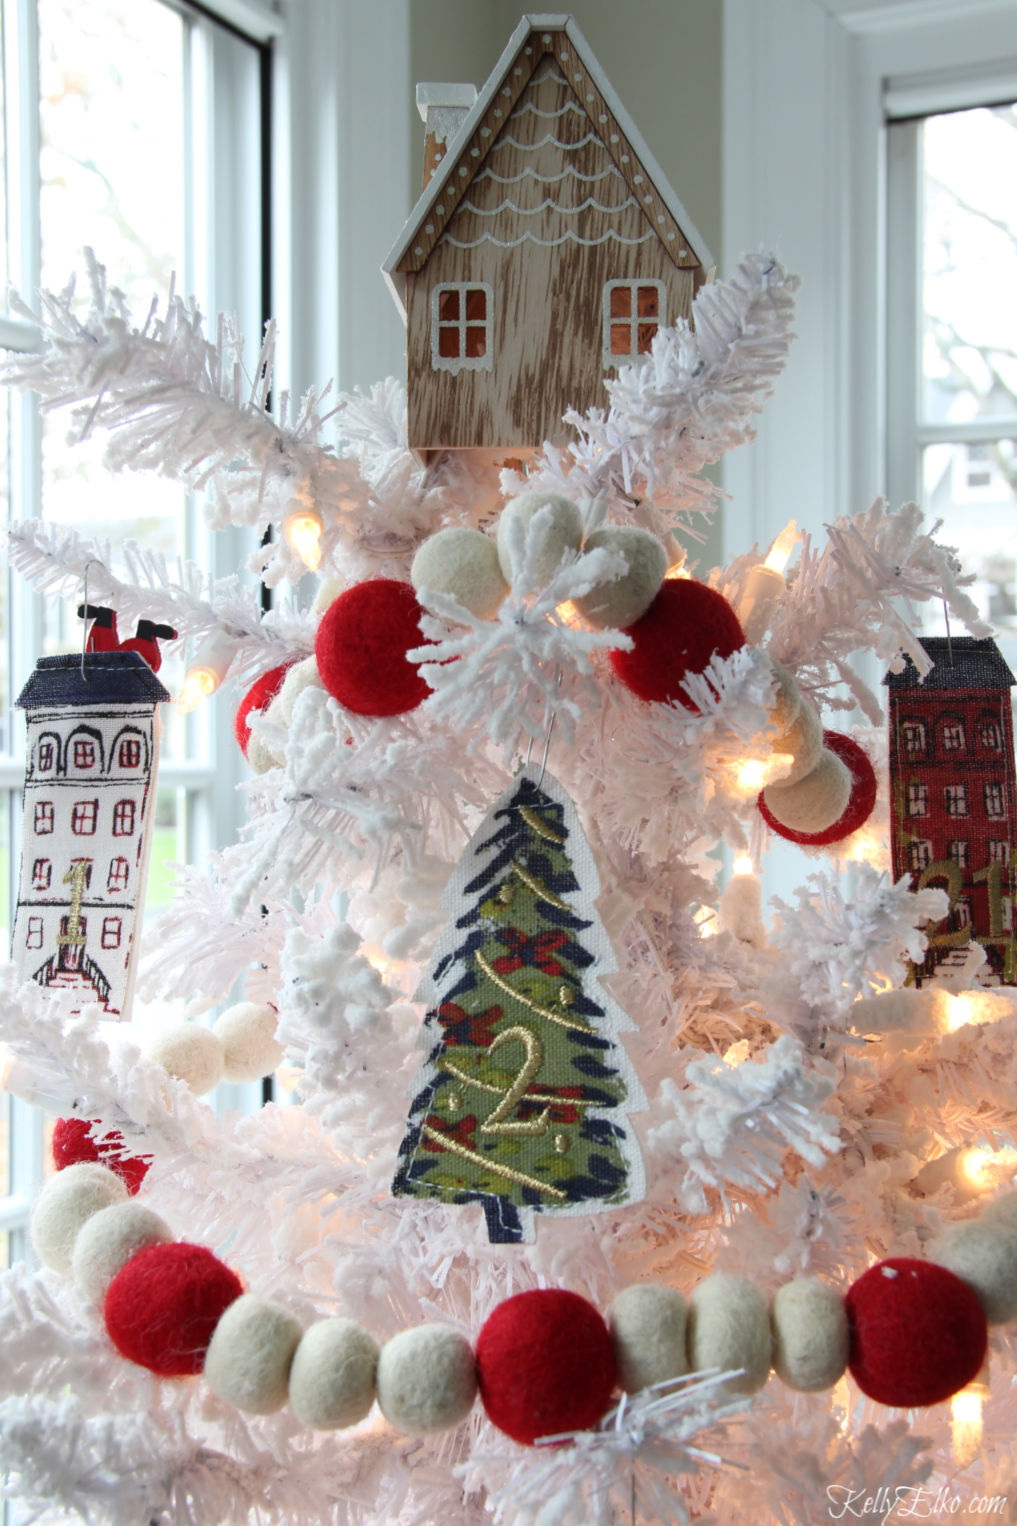 Love this advent calendar Christmas tree with tiny fabric houses kellyelko.com #christmas #diychristmas #christmastree #whitechristmastree #whitechristmas #adventcalendar #christmasgarland #kidschristmas #kellyelko